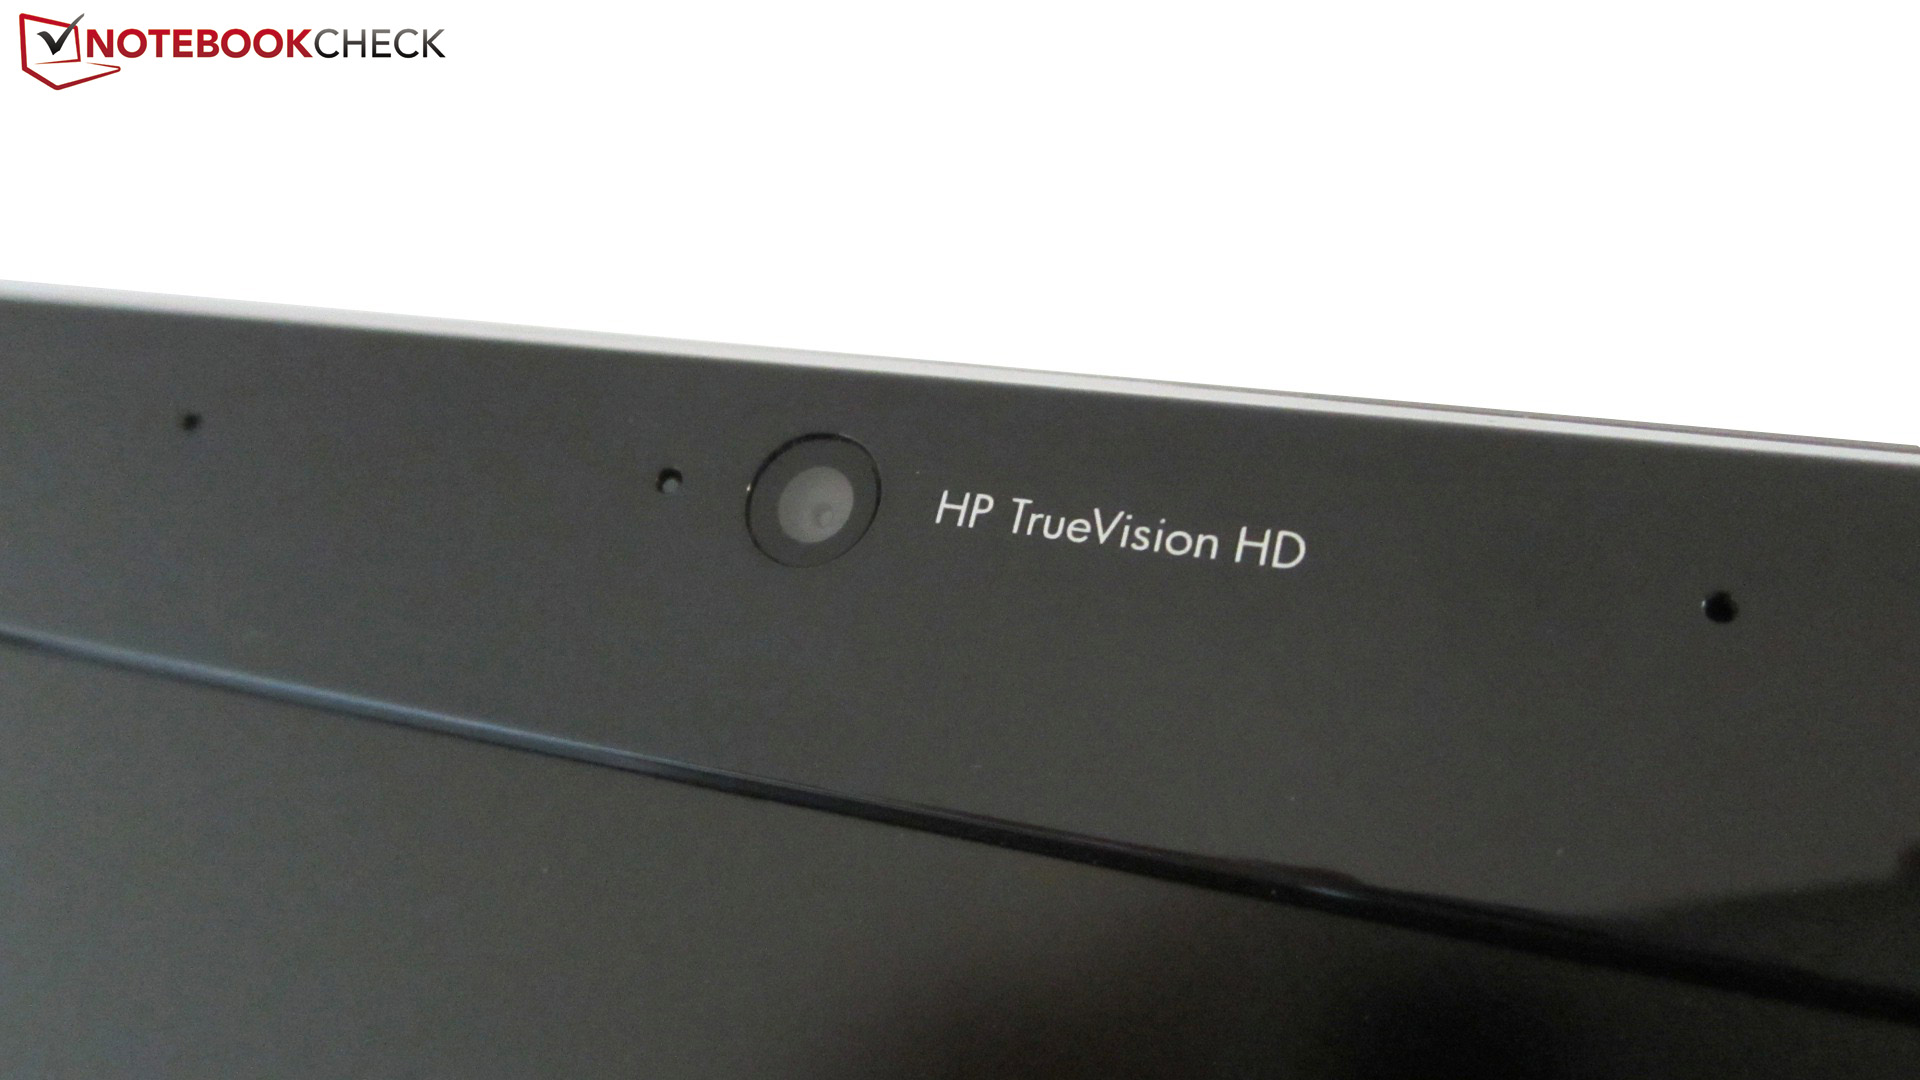 hp truevision hd webcam for windows 7 home premium